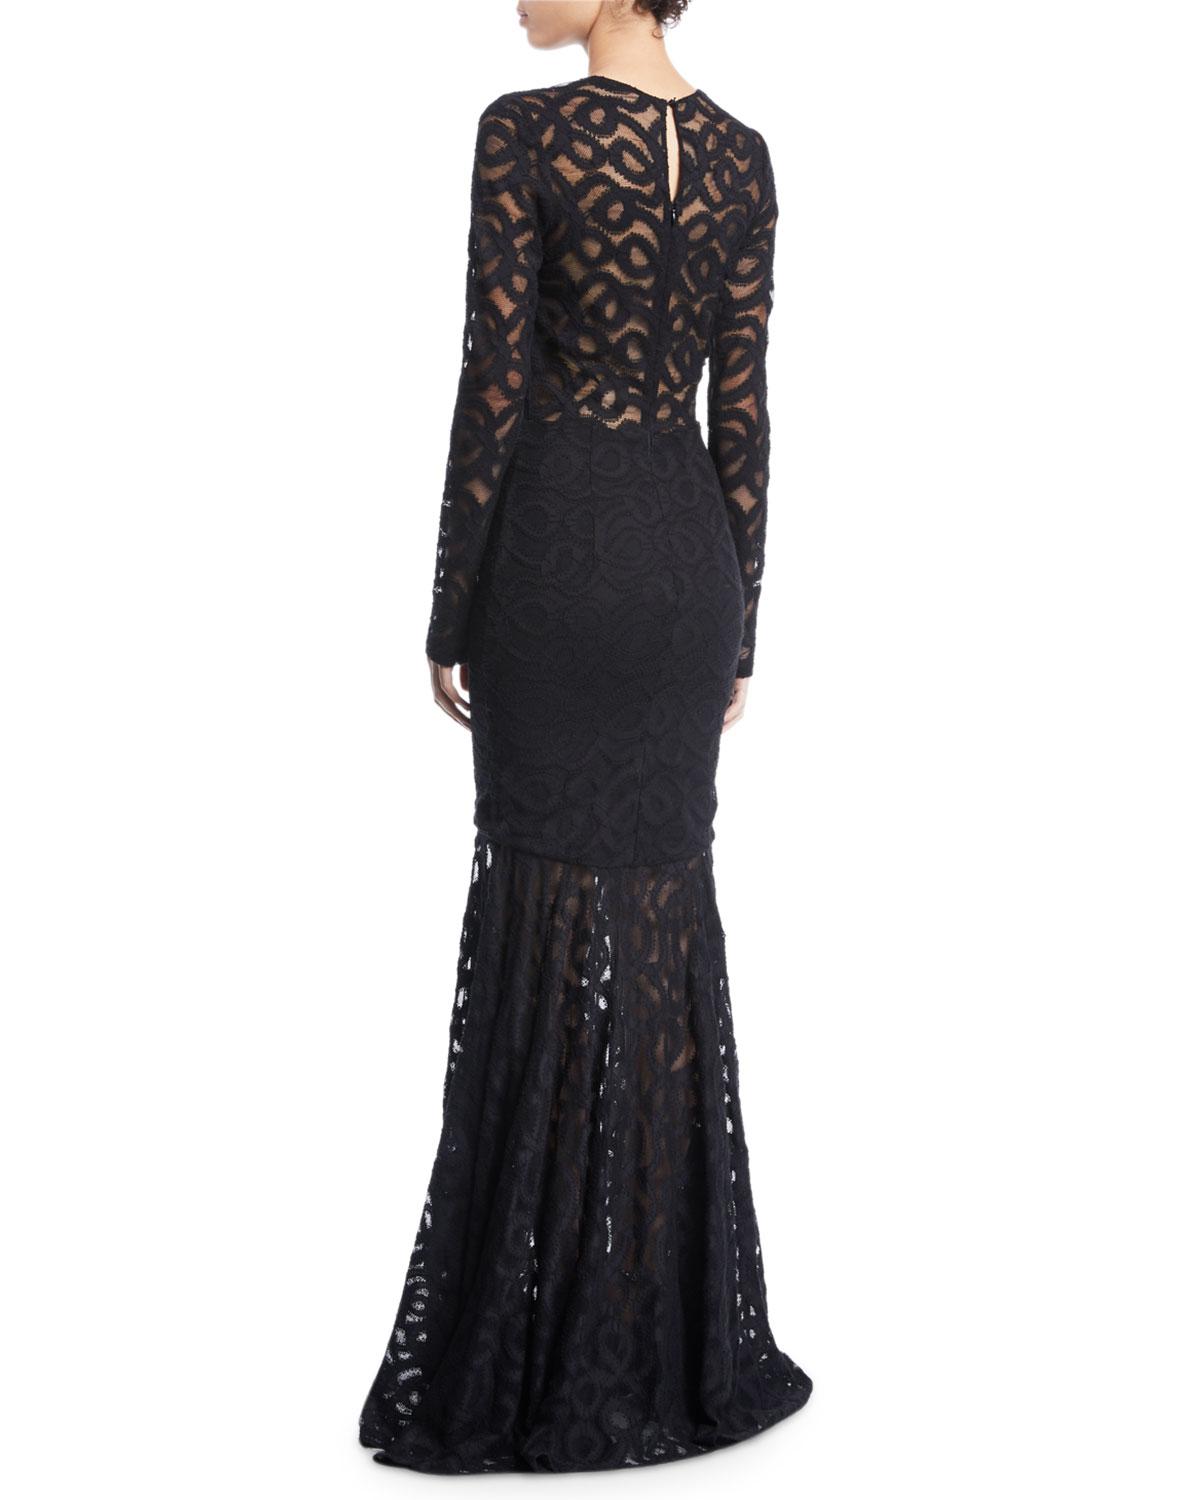 black long sleeve fishtail dress